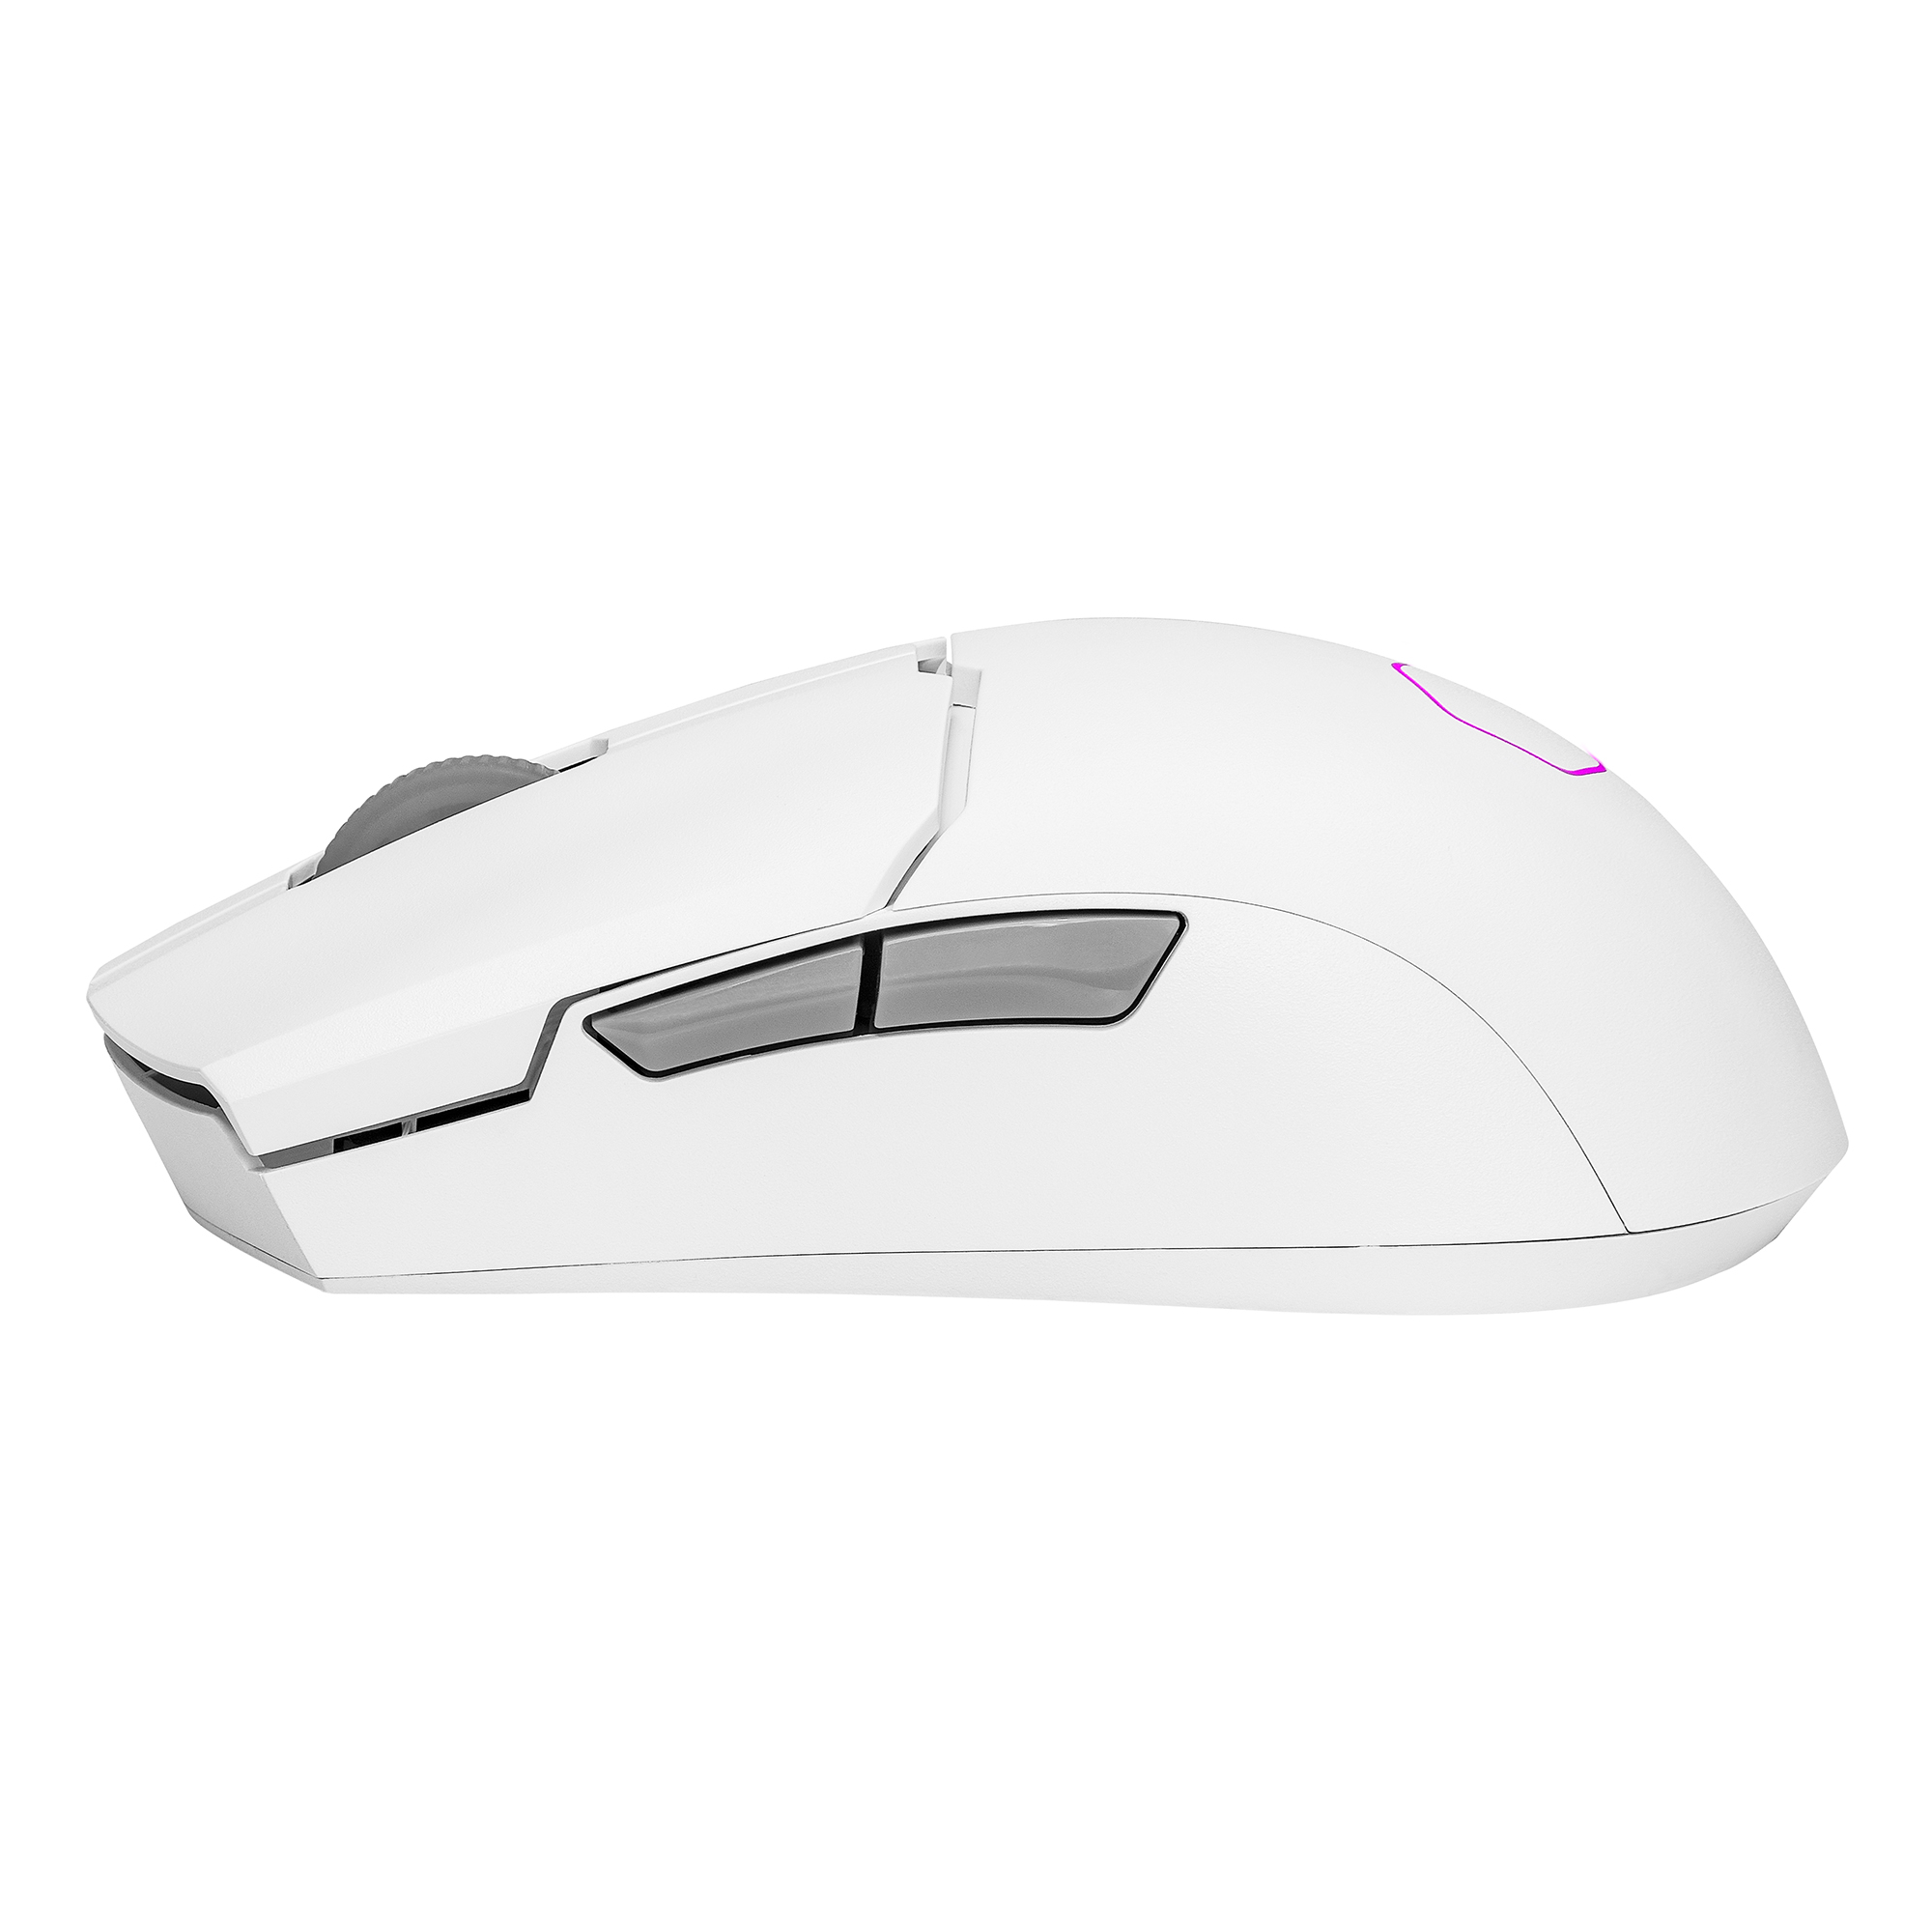 Cooler Master - Cooler Master MM712 Hybrid Wireless Ultra Light RGB Gaming Mouse - White